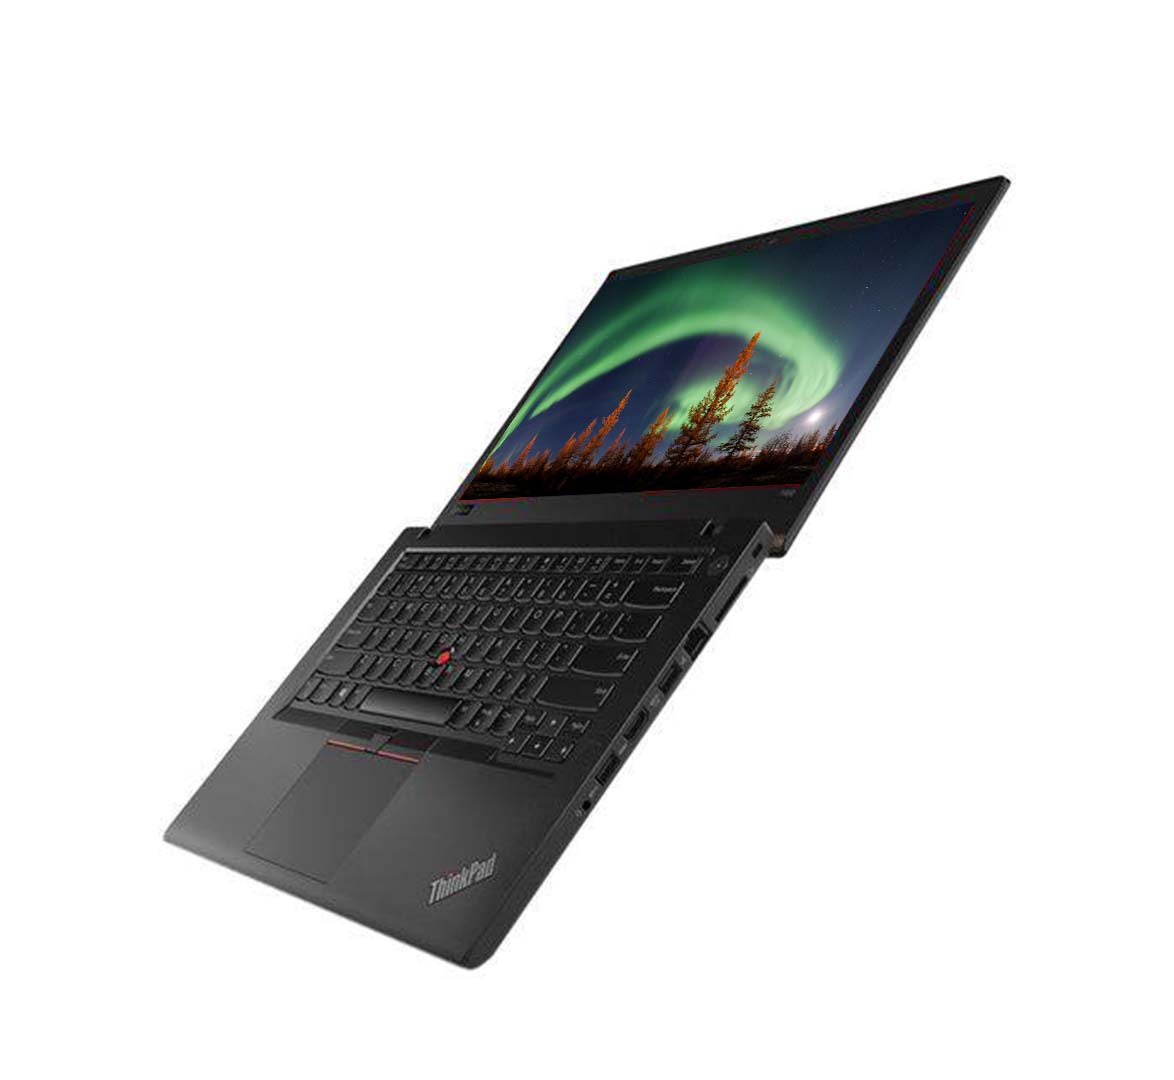 Lenovo ThinkPad T480s Business Laptop, Intel Core i5-8th Generation CPU, 8GB RAM, 256GB SSD, 14 inch Display, Windows 10 Pro